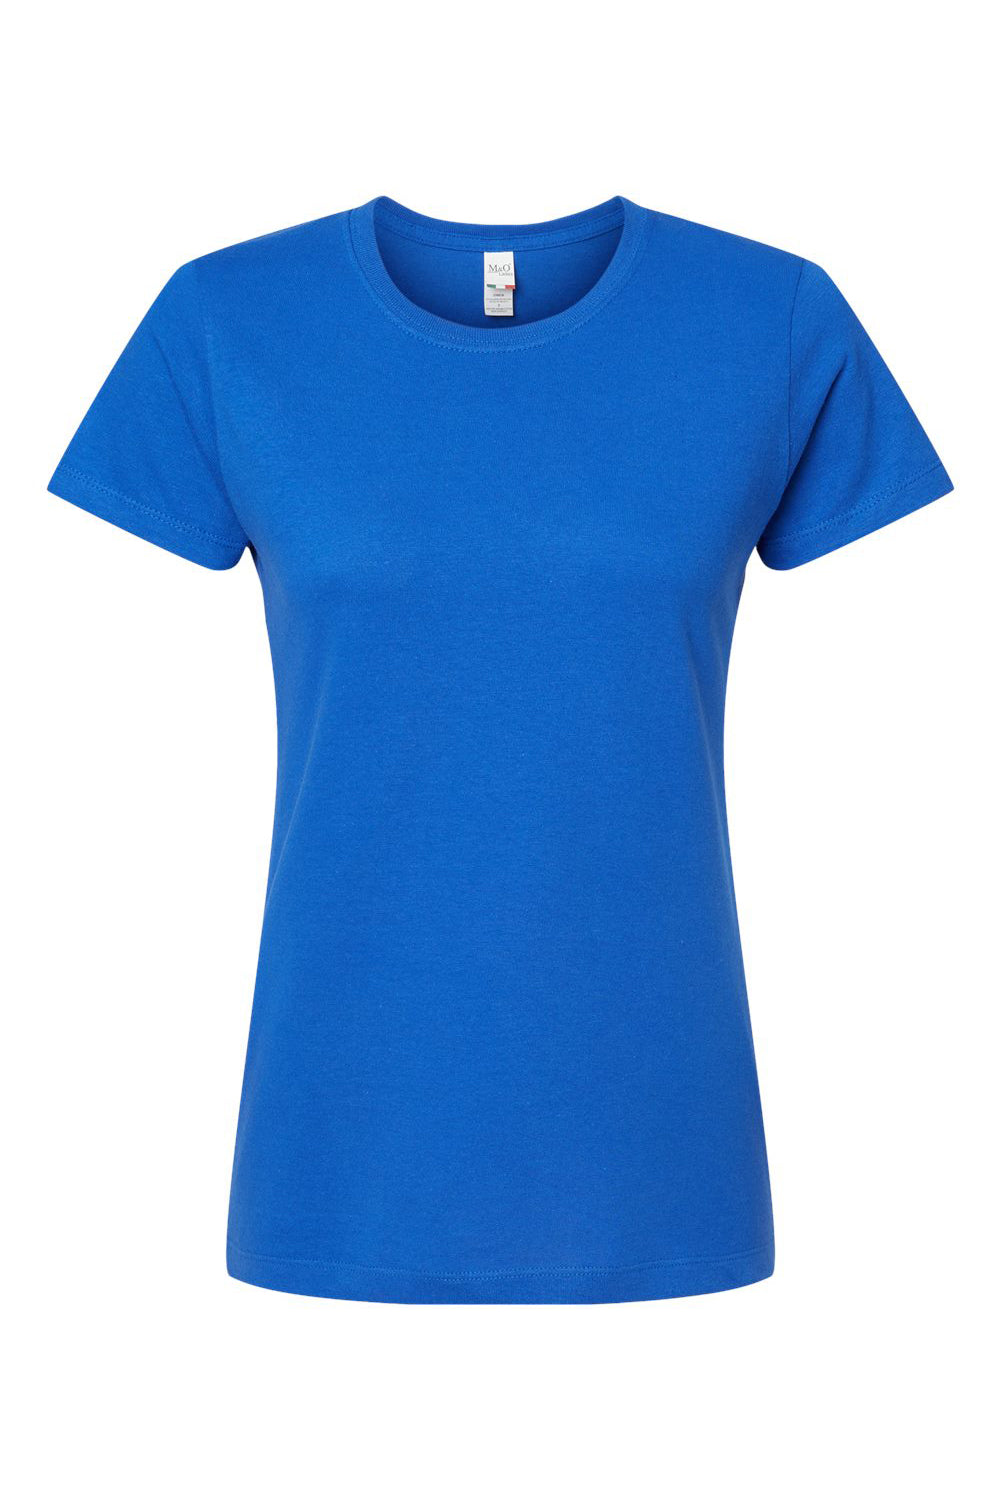 M&O 4810 Womens Gold Soft Touch Short Sleeve Crewneck T-Shirt Royal Blue Flat Front